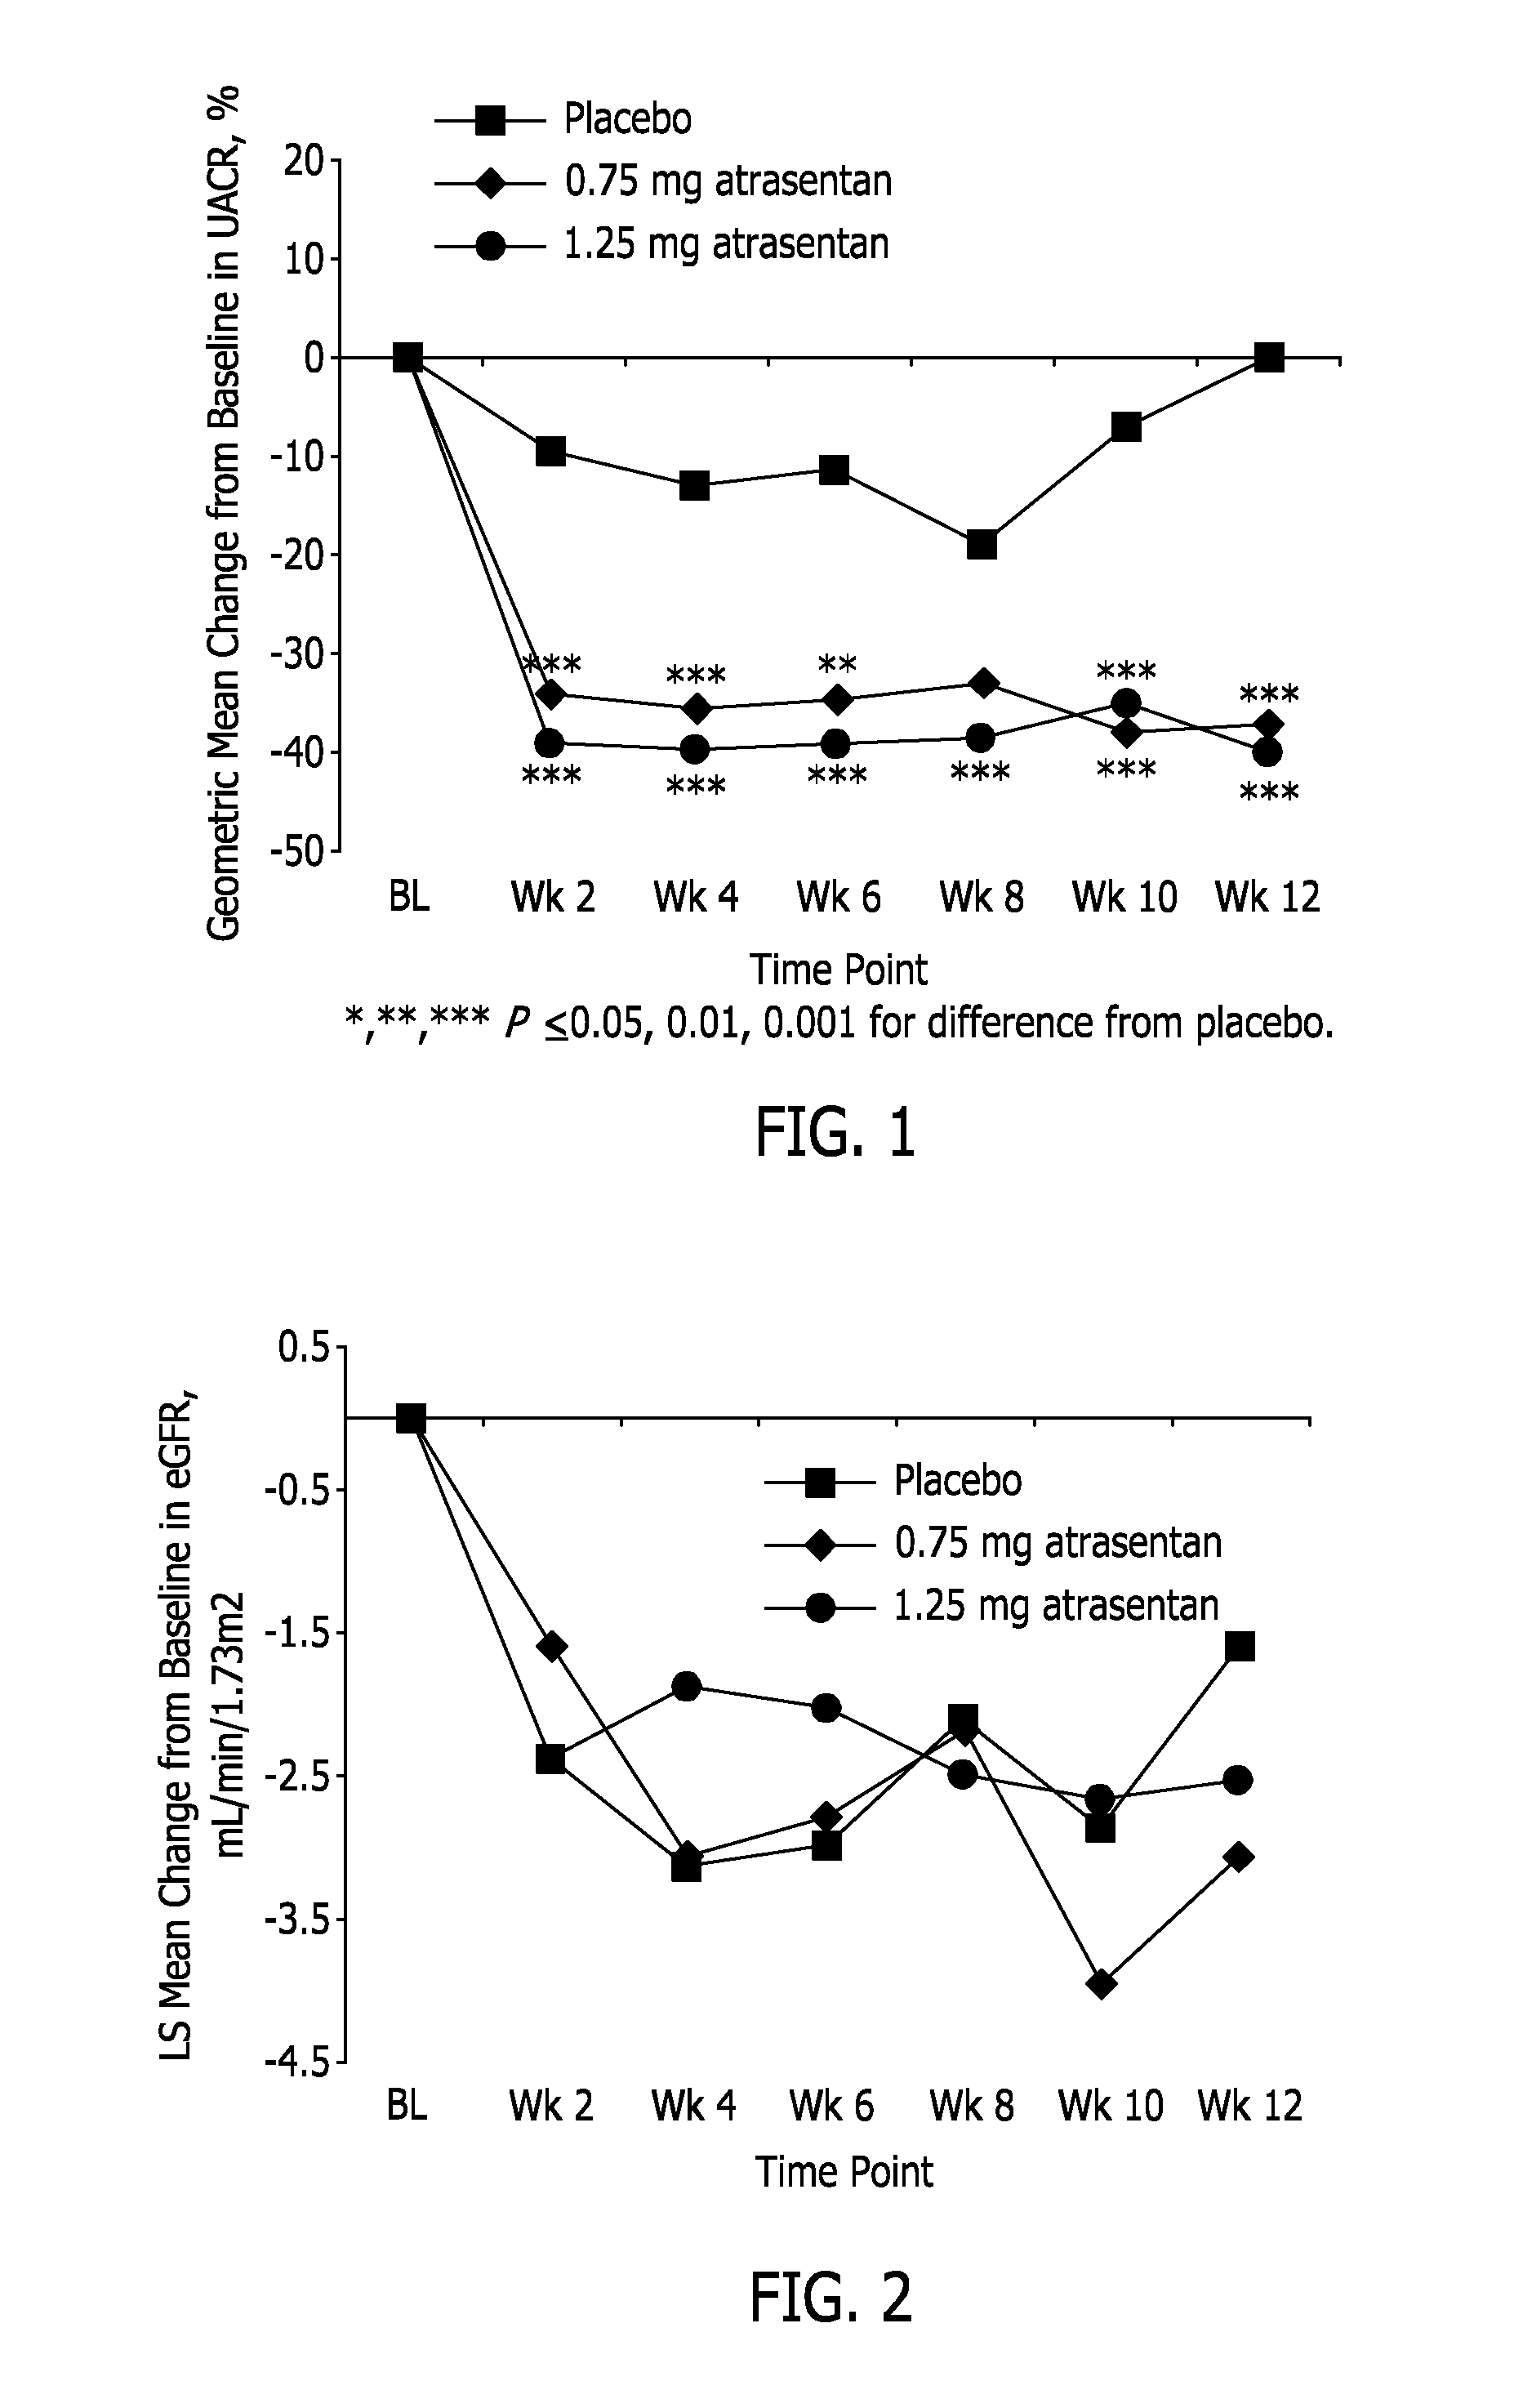 Methods for improving lipid profiles using atrasentan